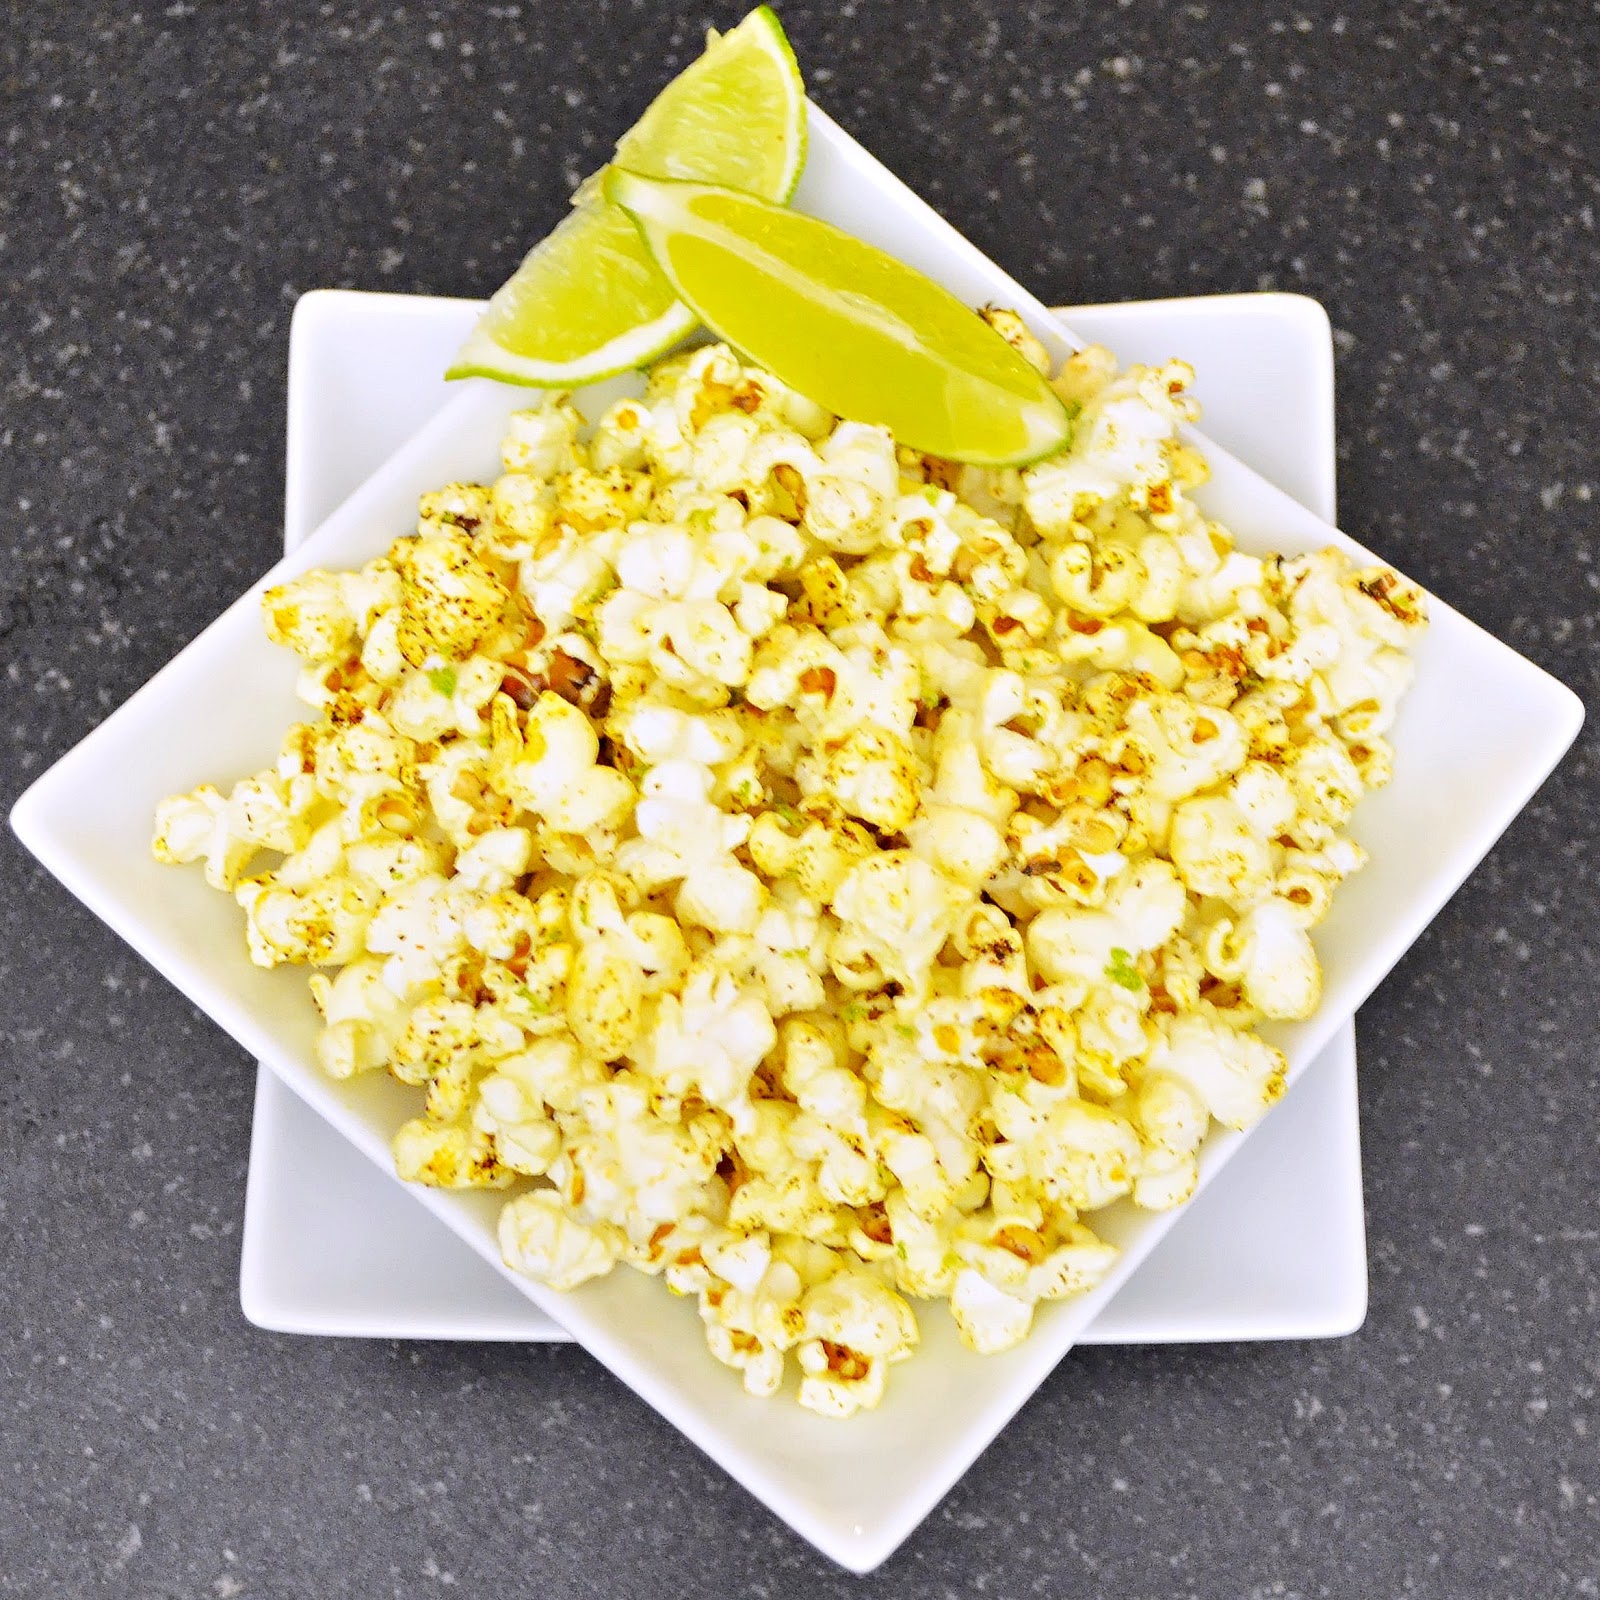 The Inventive Vegetarian: Recipe Redux: Chili Lime Popcorn